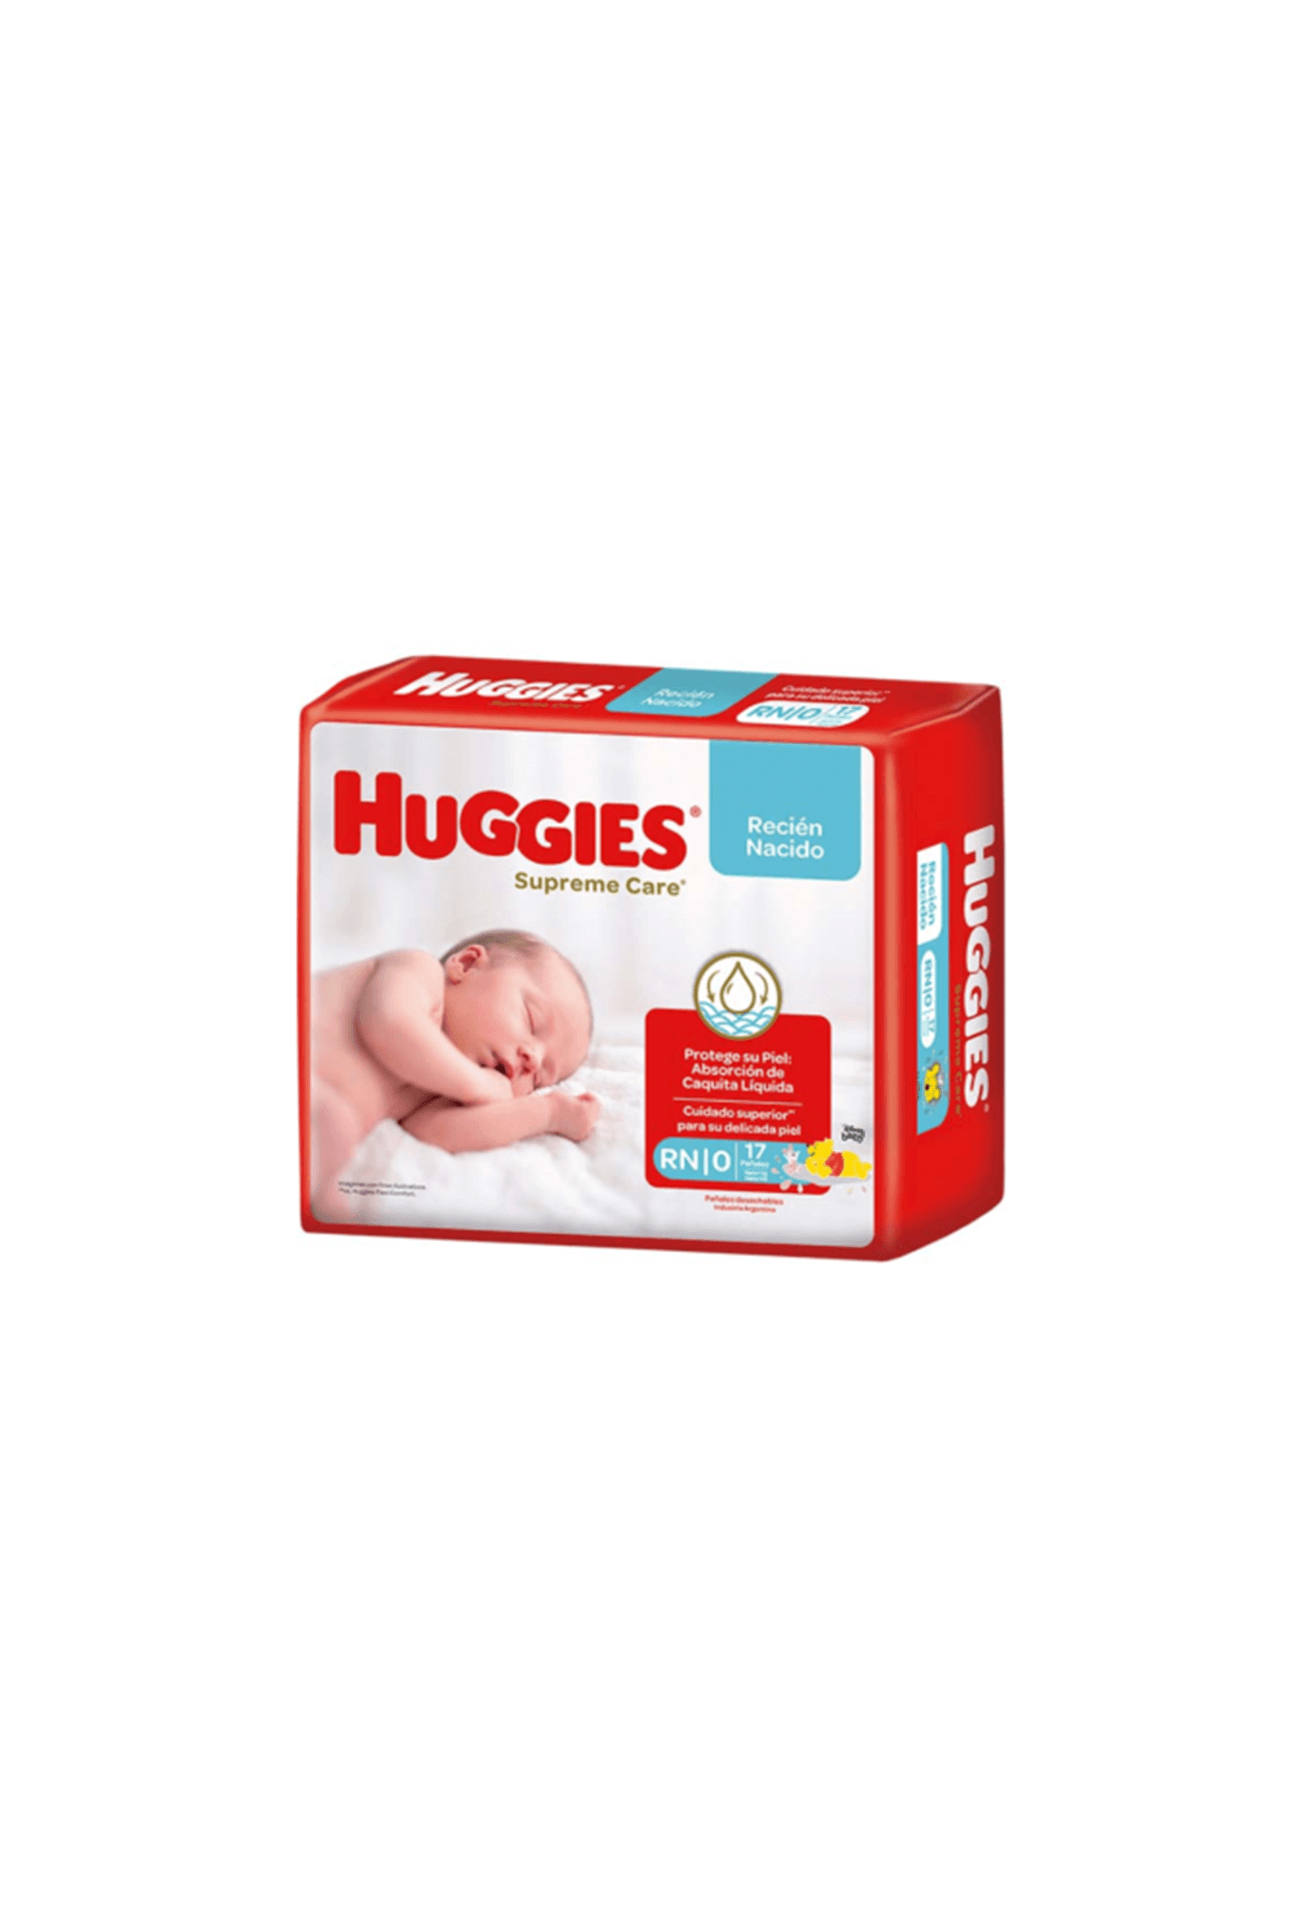 Huggies-Pañal-Huggies-Supreme-Care-Mega-RN-x-17-unid-7794626013355_img1